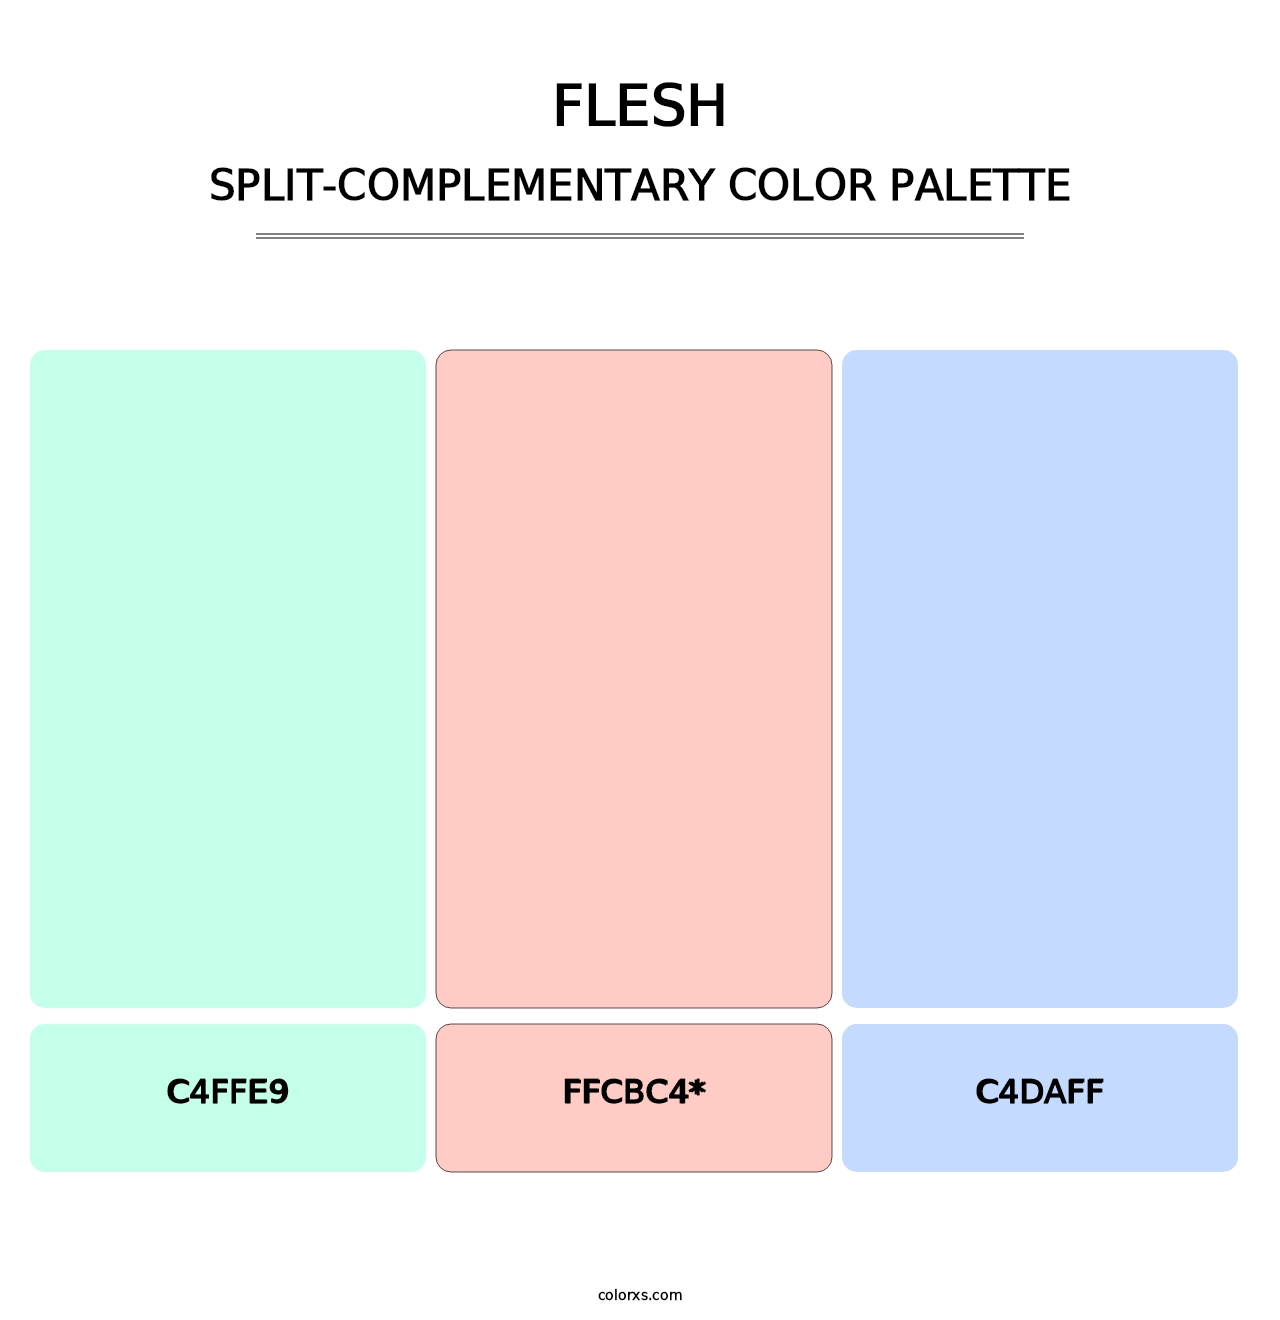 Flesh - Split-Complementary Color Palette